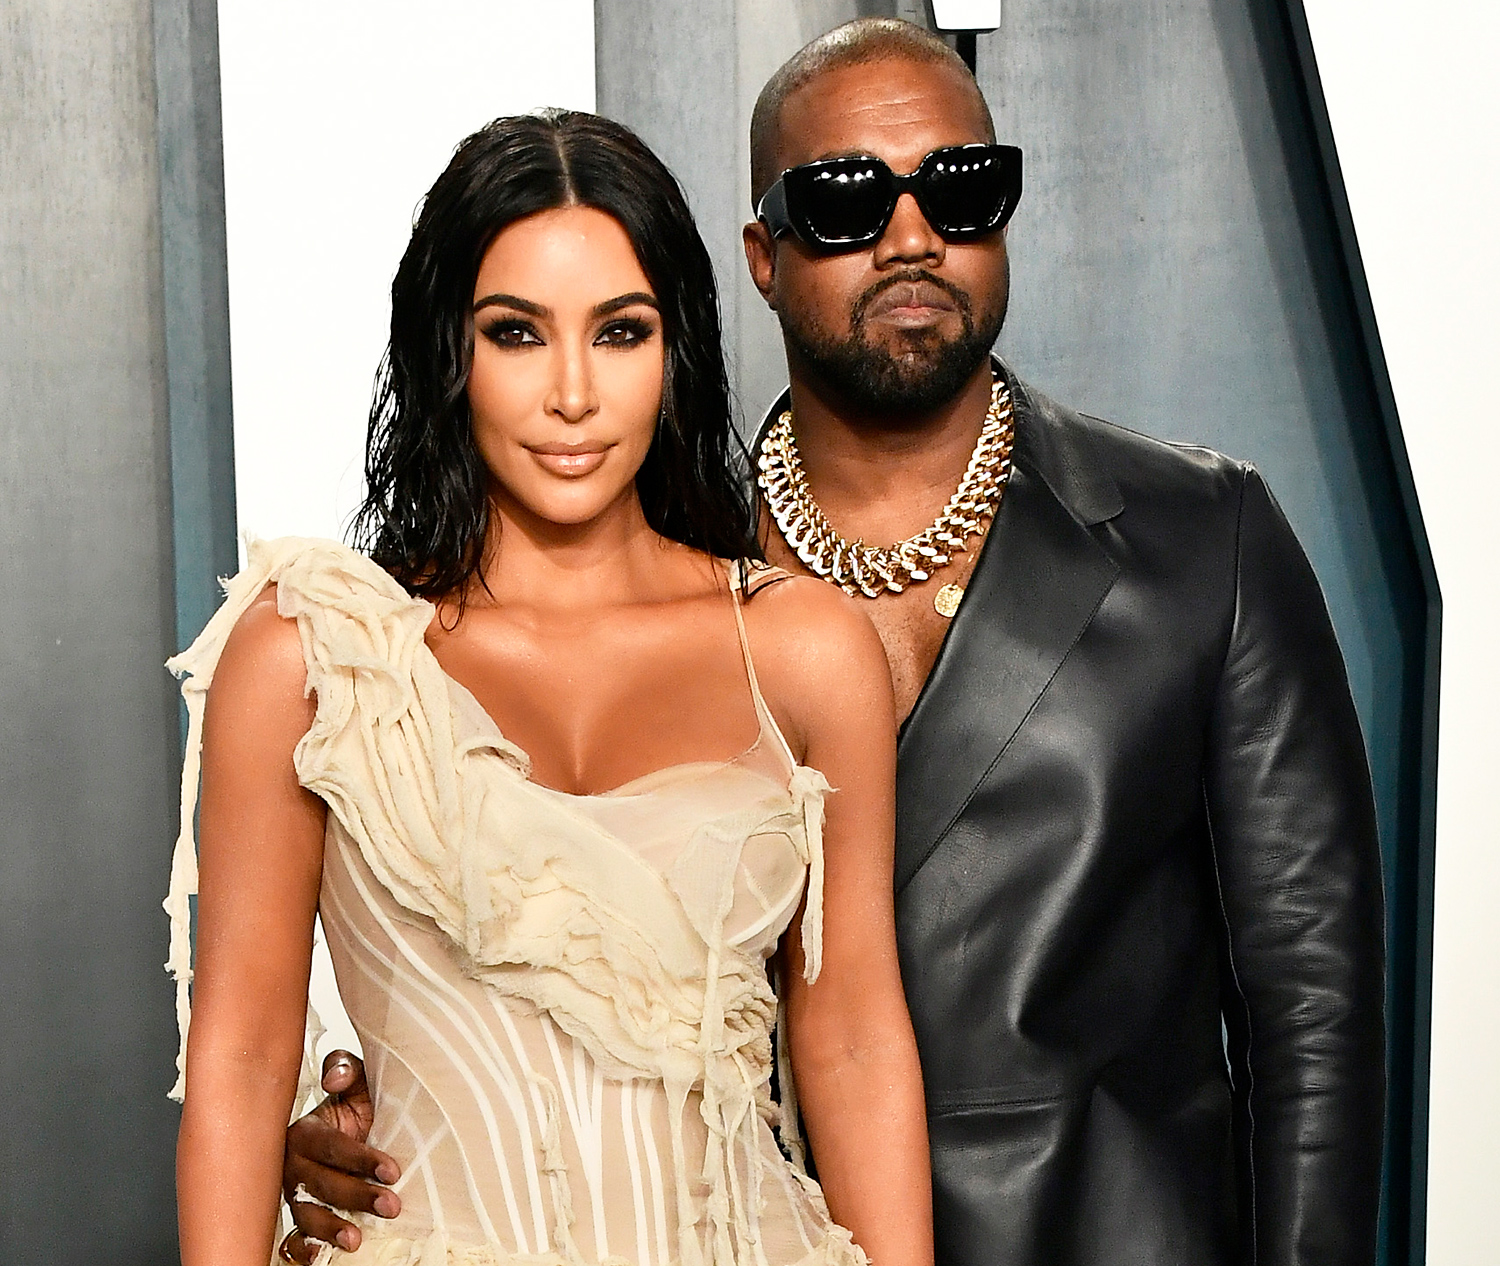 Kanye wants his wife Kim Kardashian back